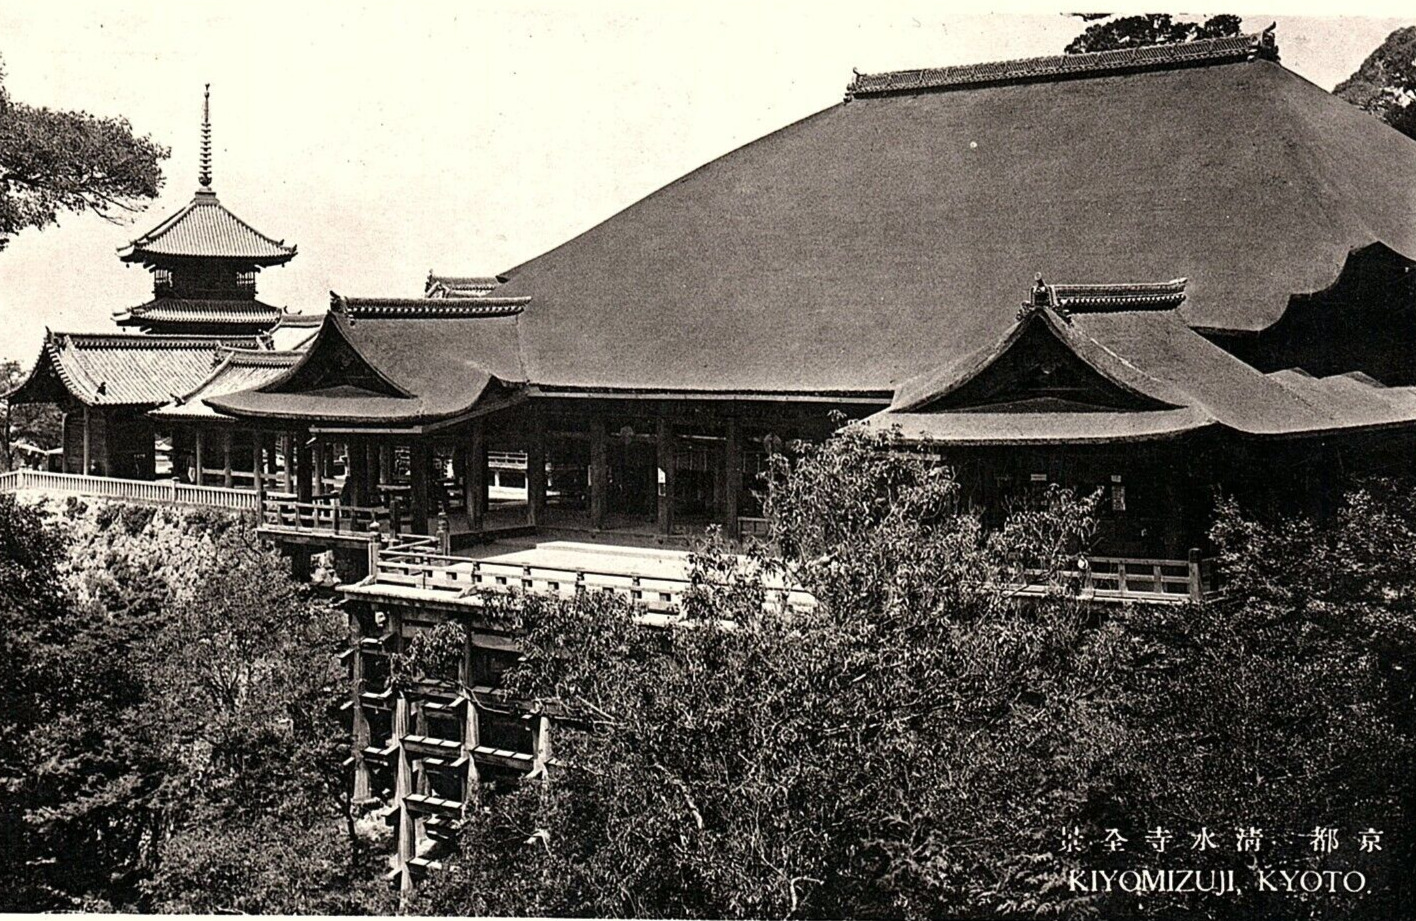 1920s KYOTO JAPAN KIYOMIZUJI TEMPLE PHOTO RPPC POSTCARD P1421